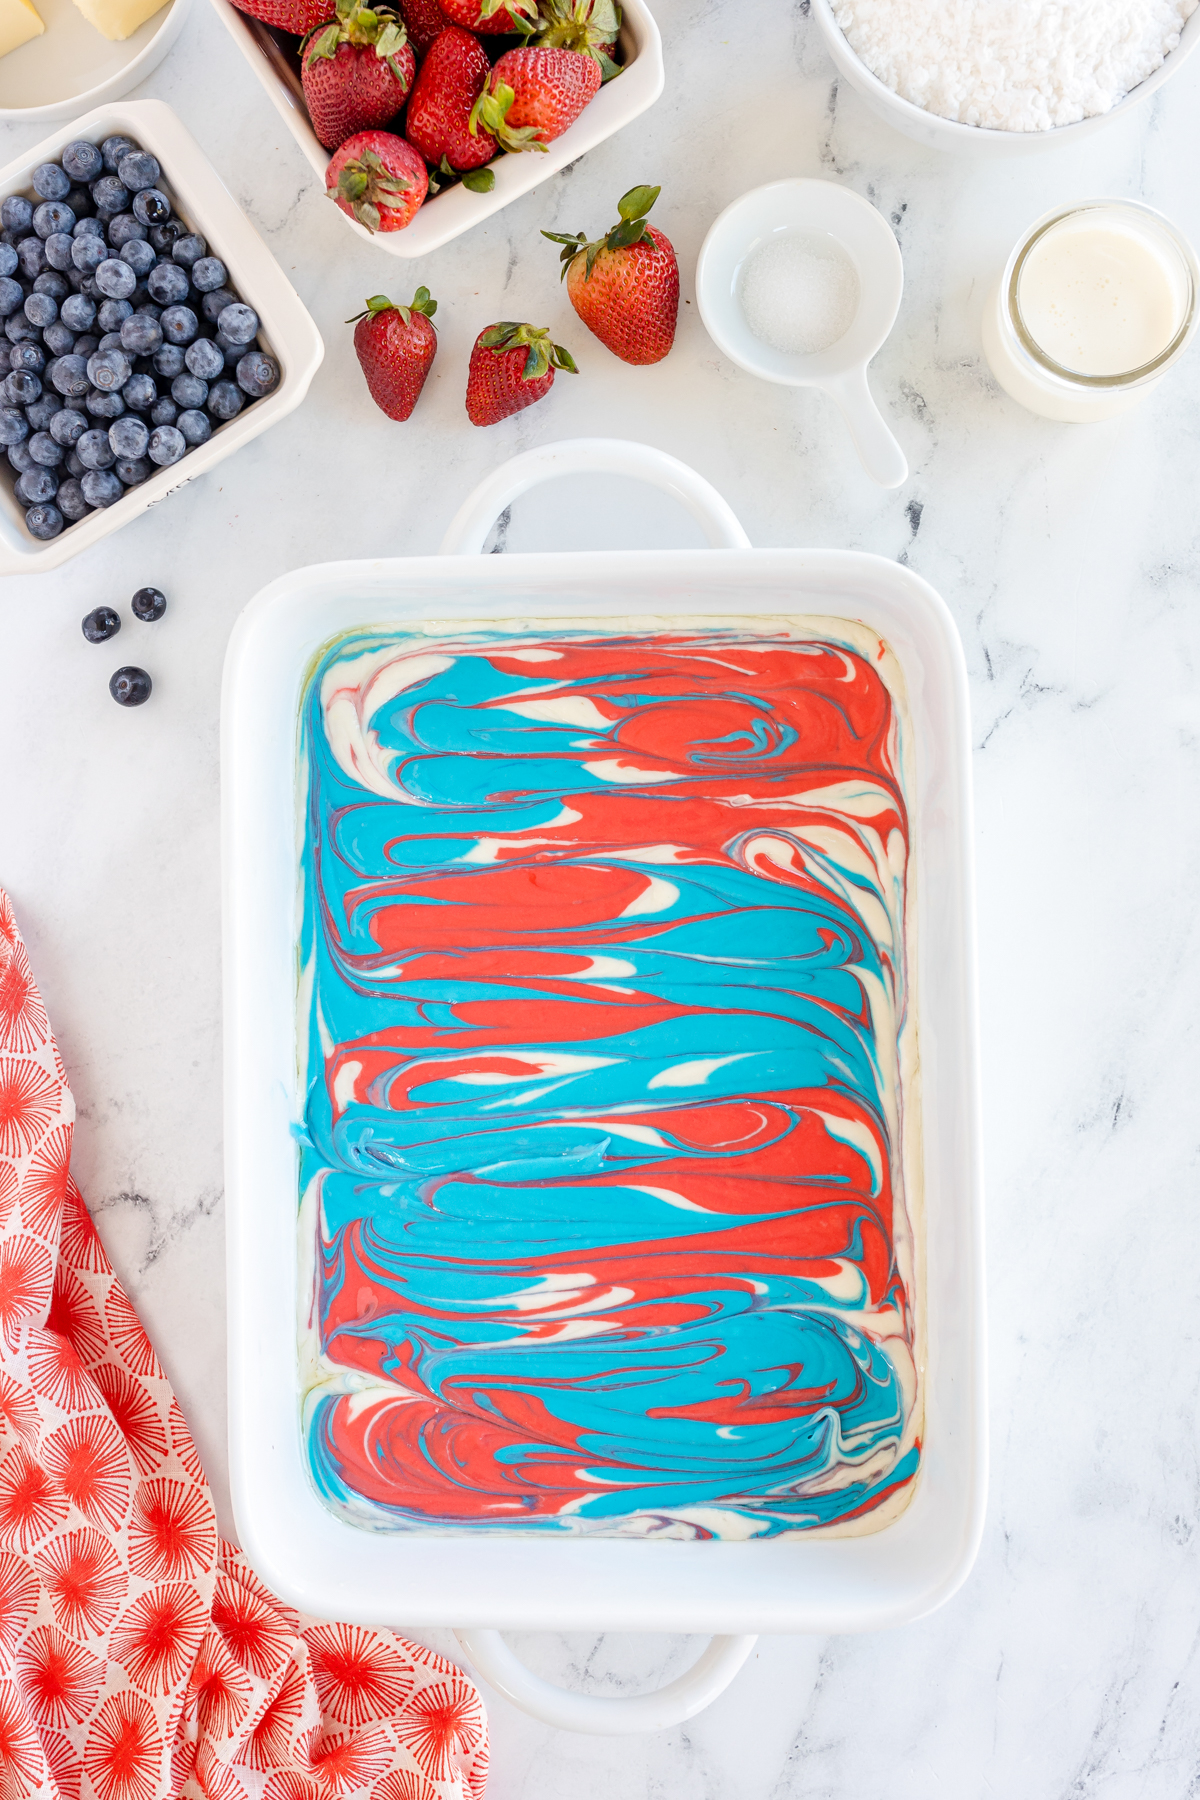 red white and blue swirled cake batter